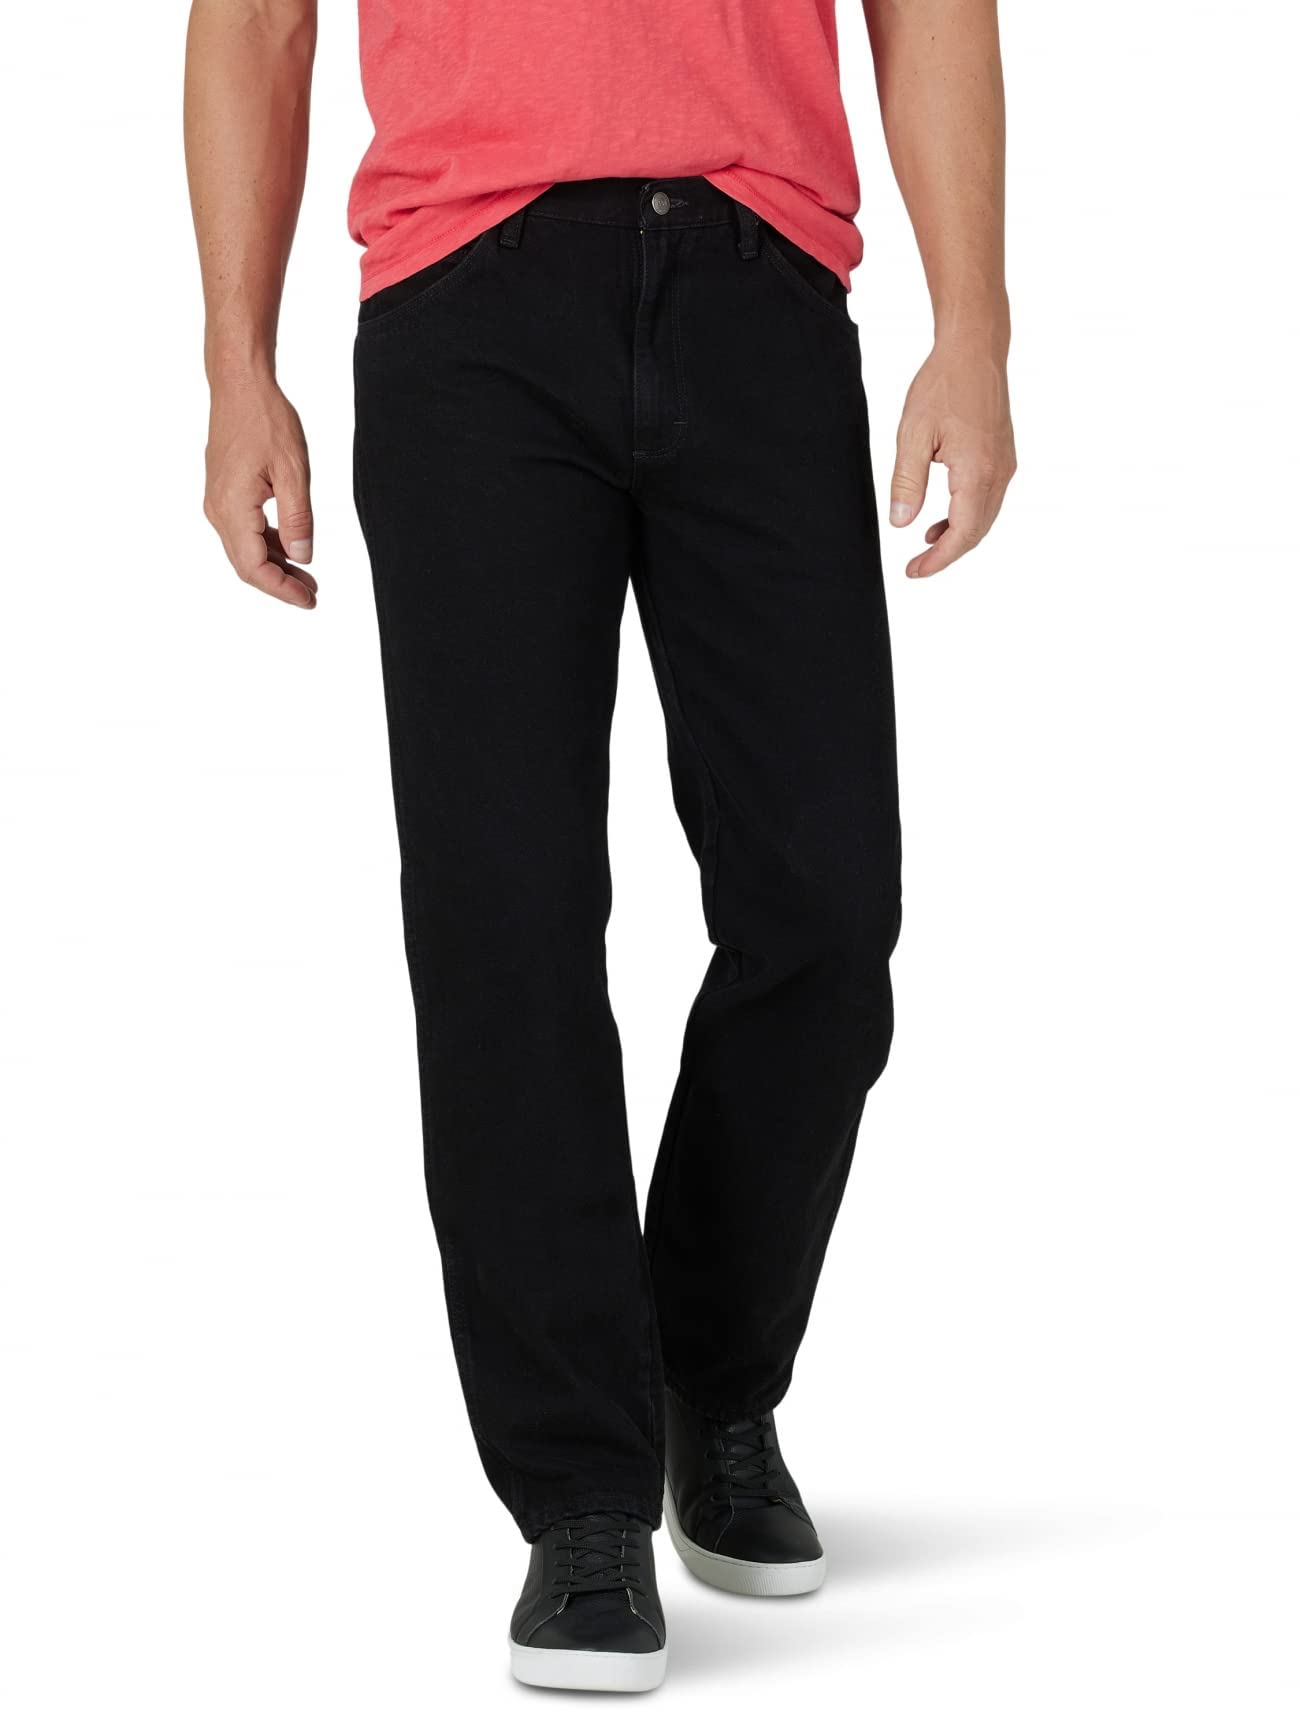 Wrangler Authentics Men's Classic 5-Pocket Regular Fit Cotton Jean, Black, 36W x 30L